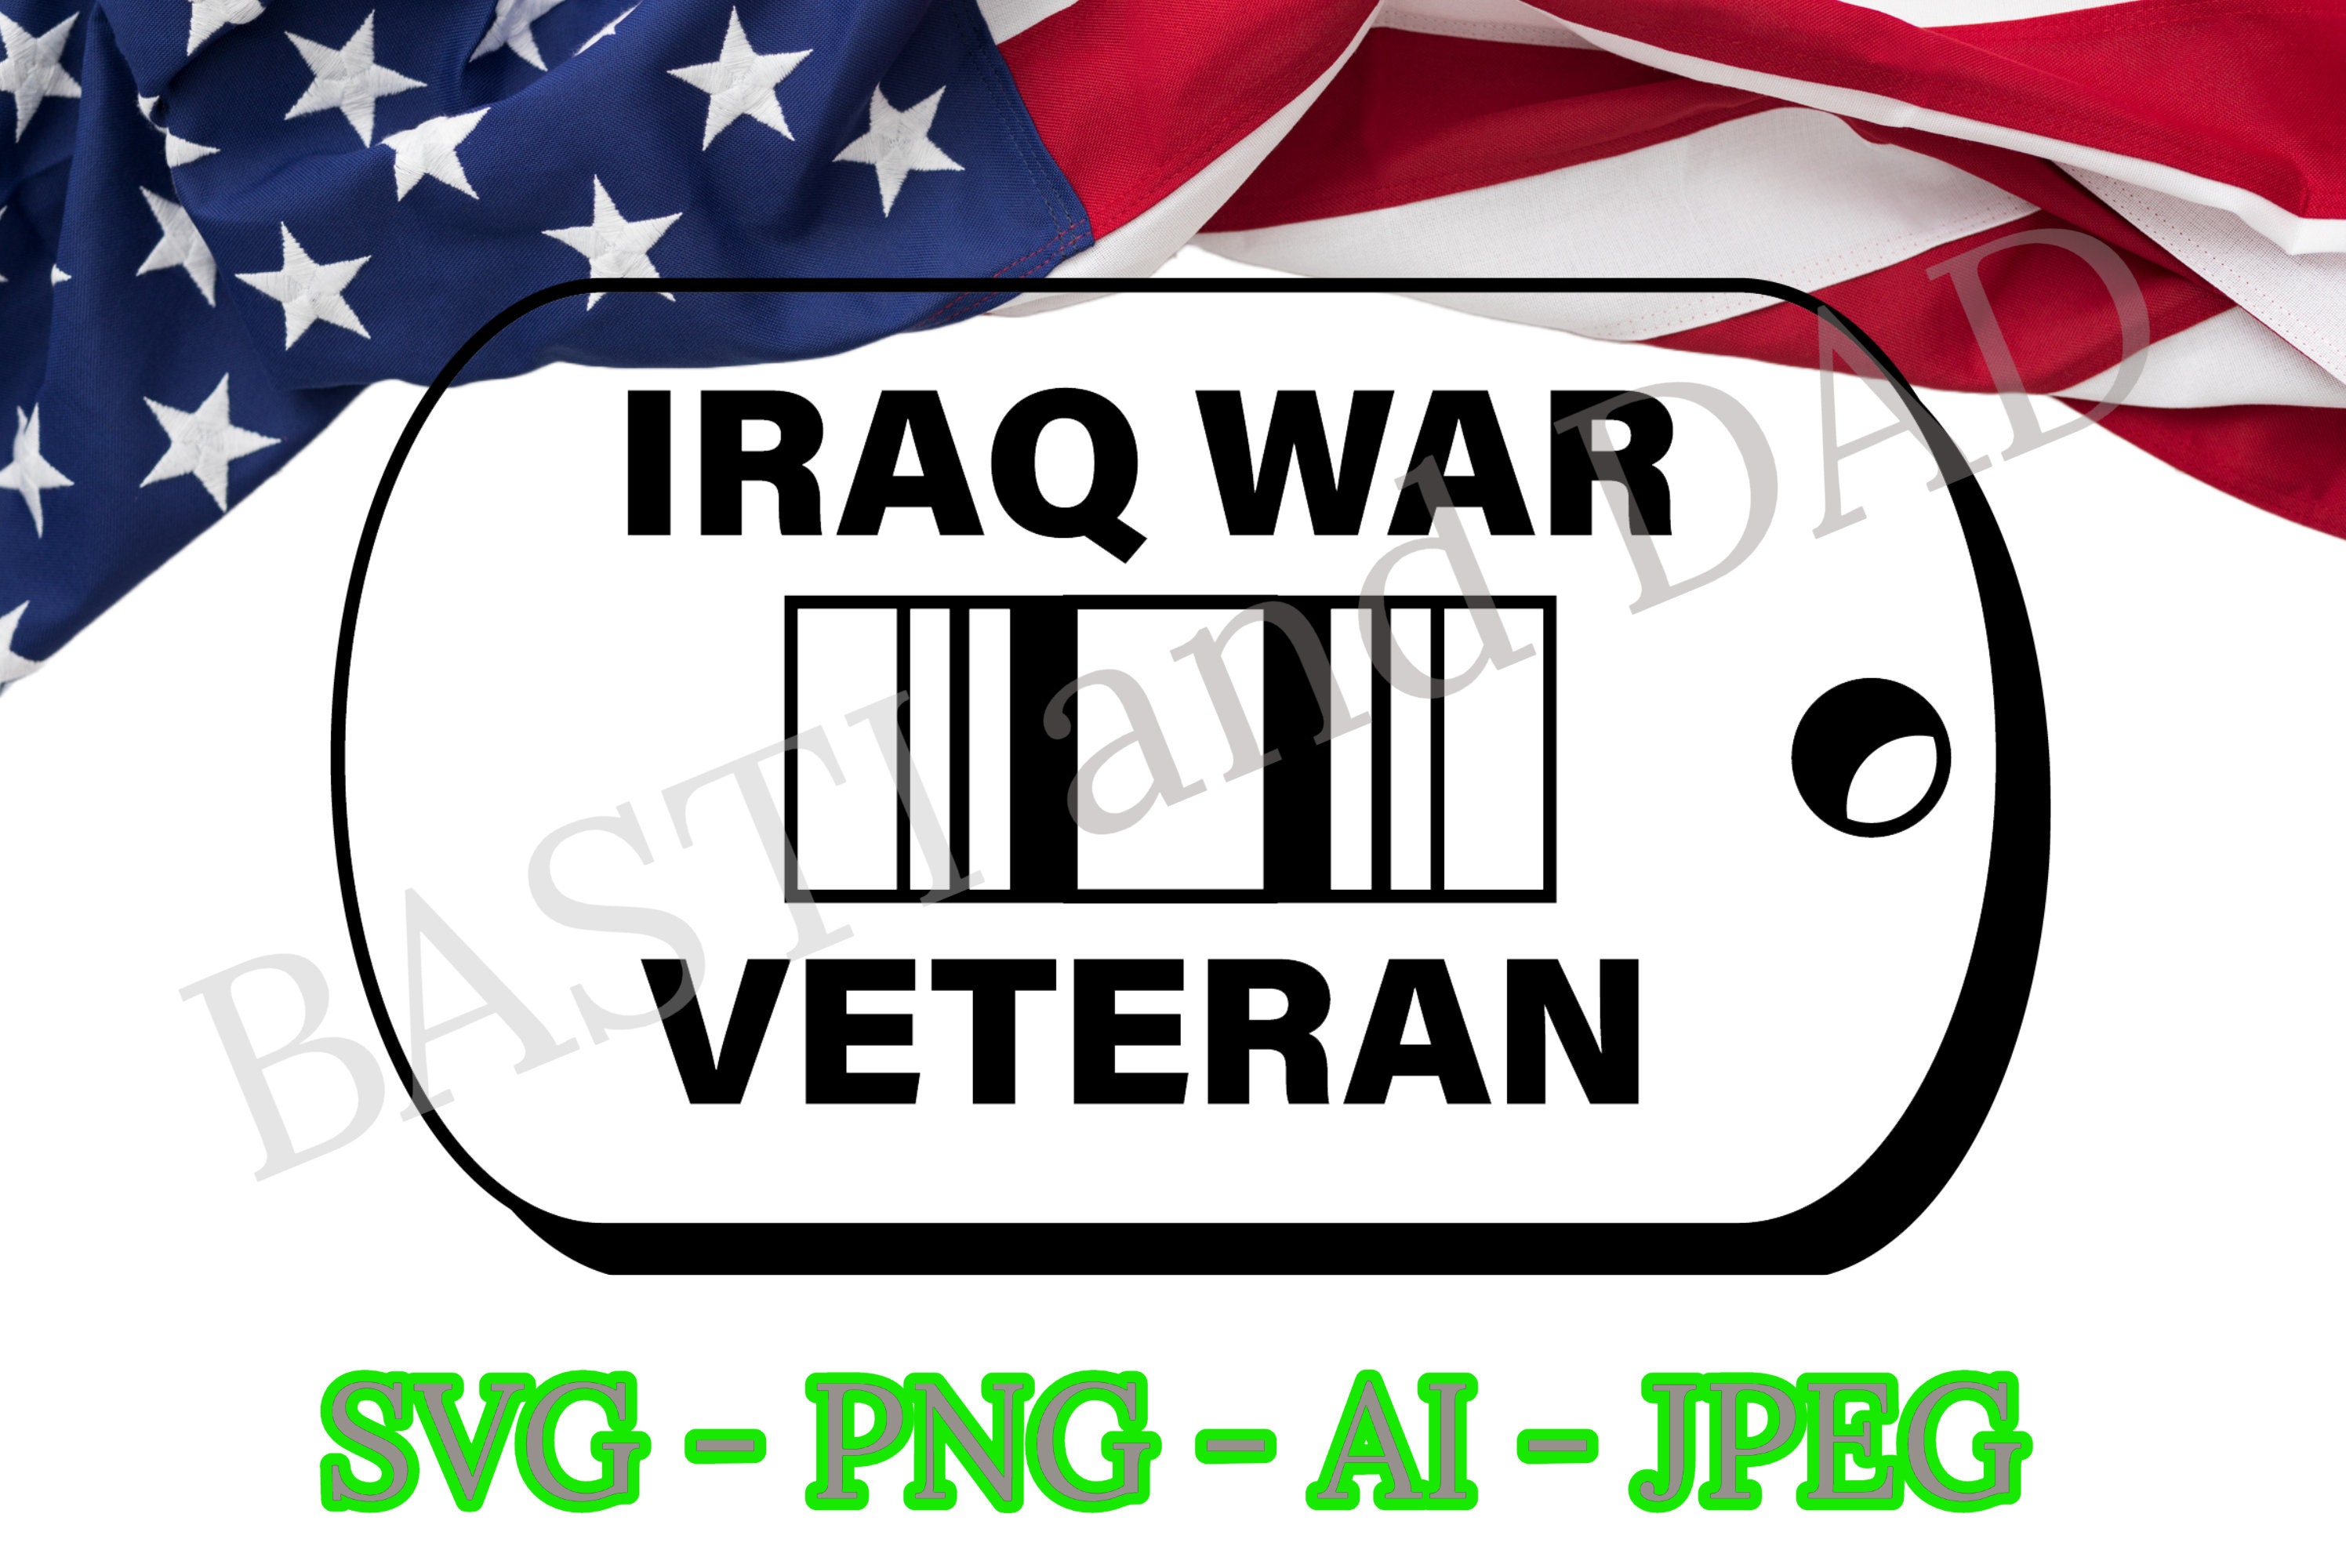 Irak Flagge Karte SVG, Irak Flagge SVG Cricut Cut Datei, Middle East  Country Nation Silhouette Scrapbook Clipart Vektor Icon eps ai png jpg pdf  - .de